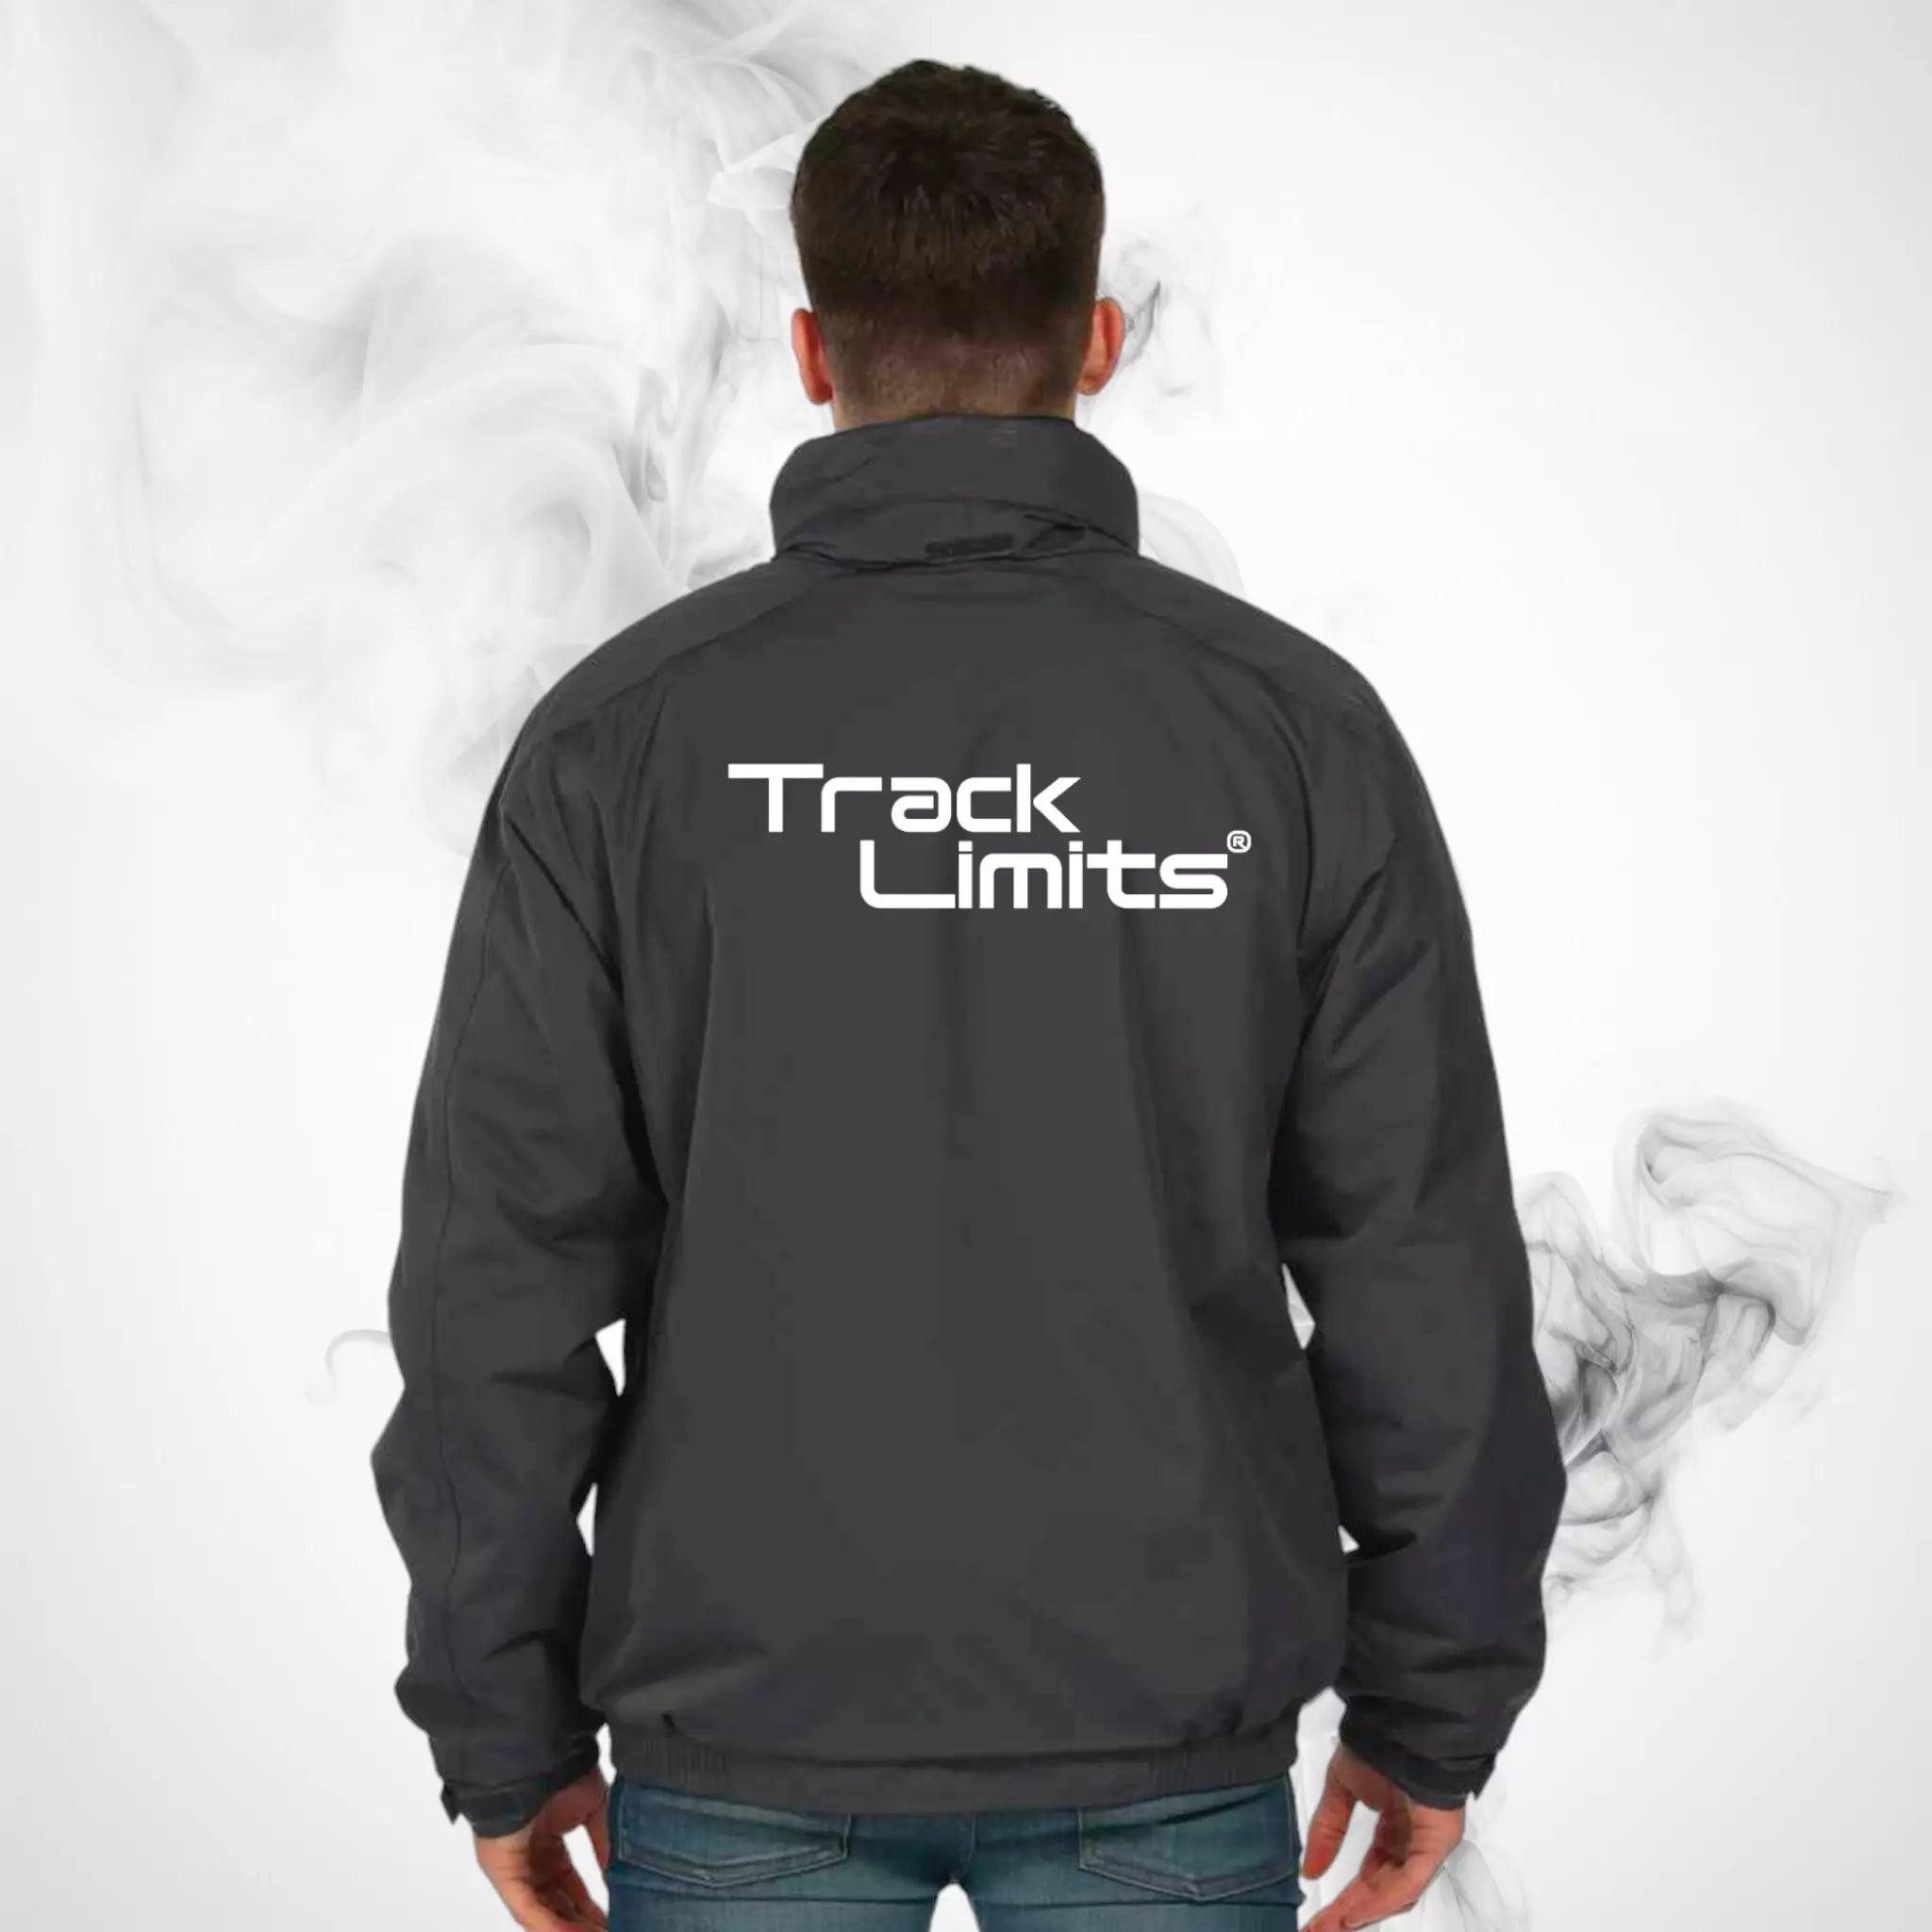 Track Limits Jacket Waterproof Insulated Fleece Lined - Dash Racegear 